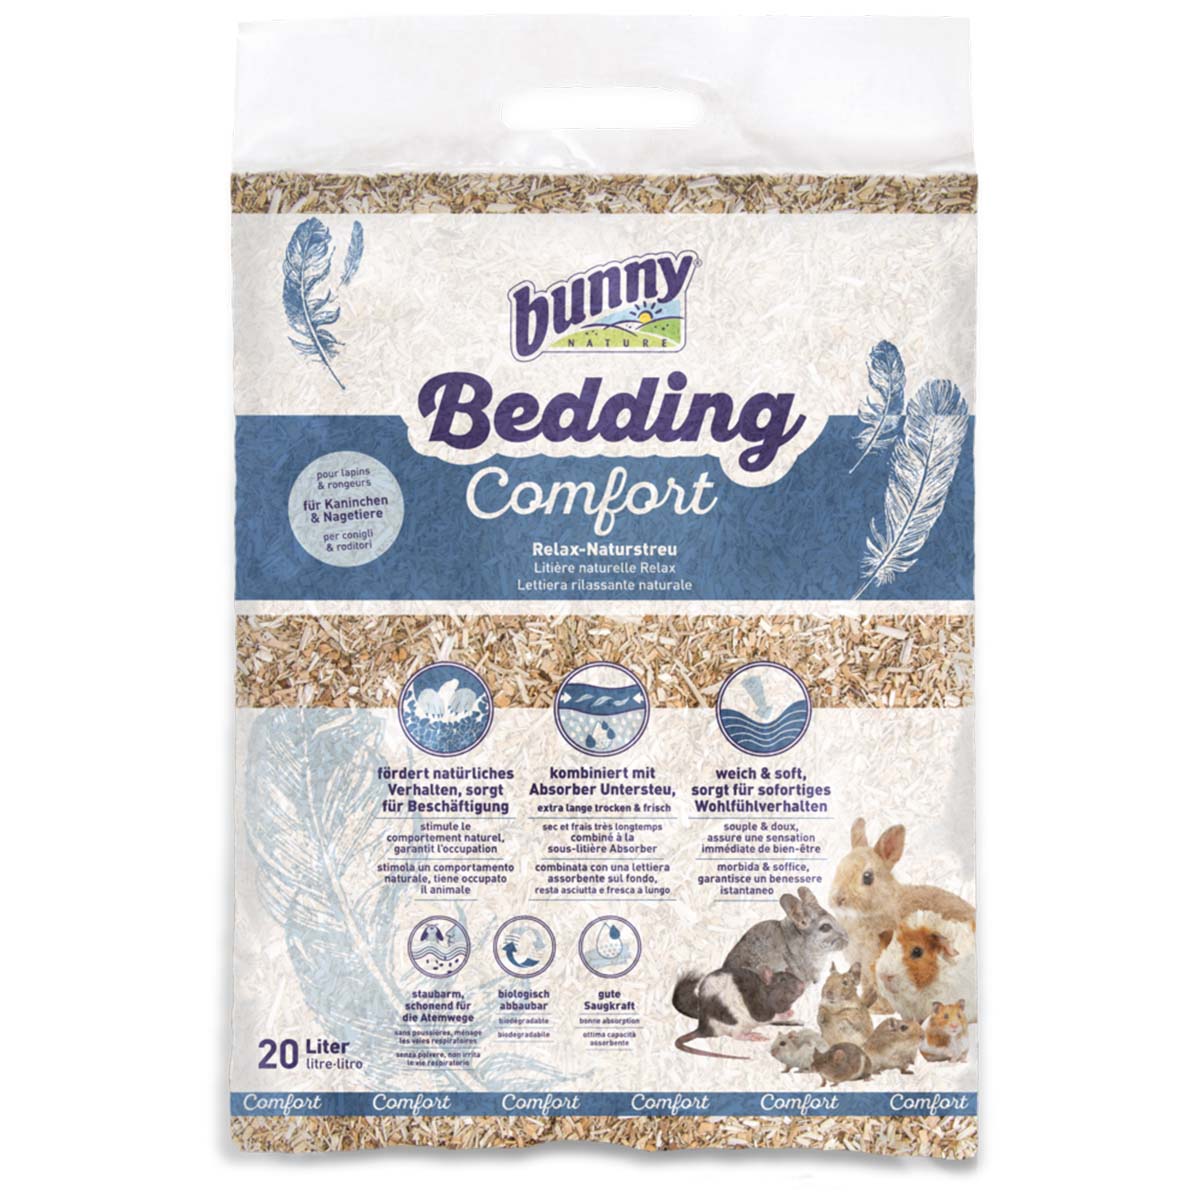 bunny Bedding Comfort 2x20L